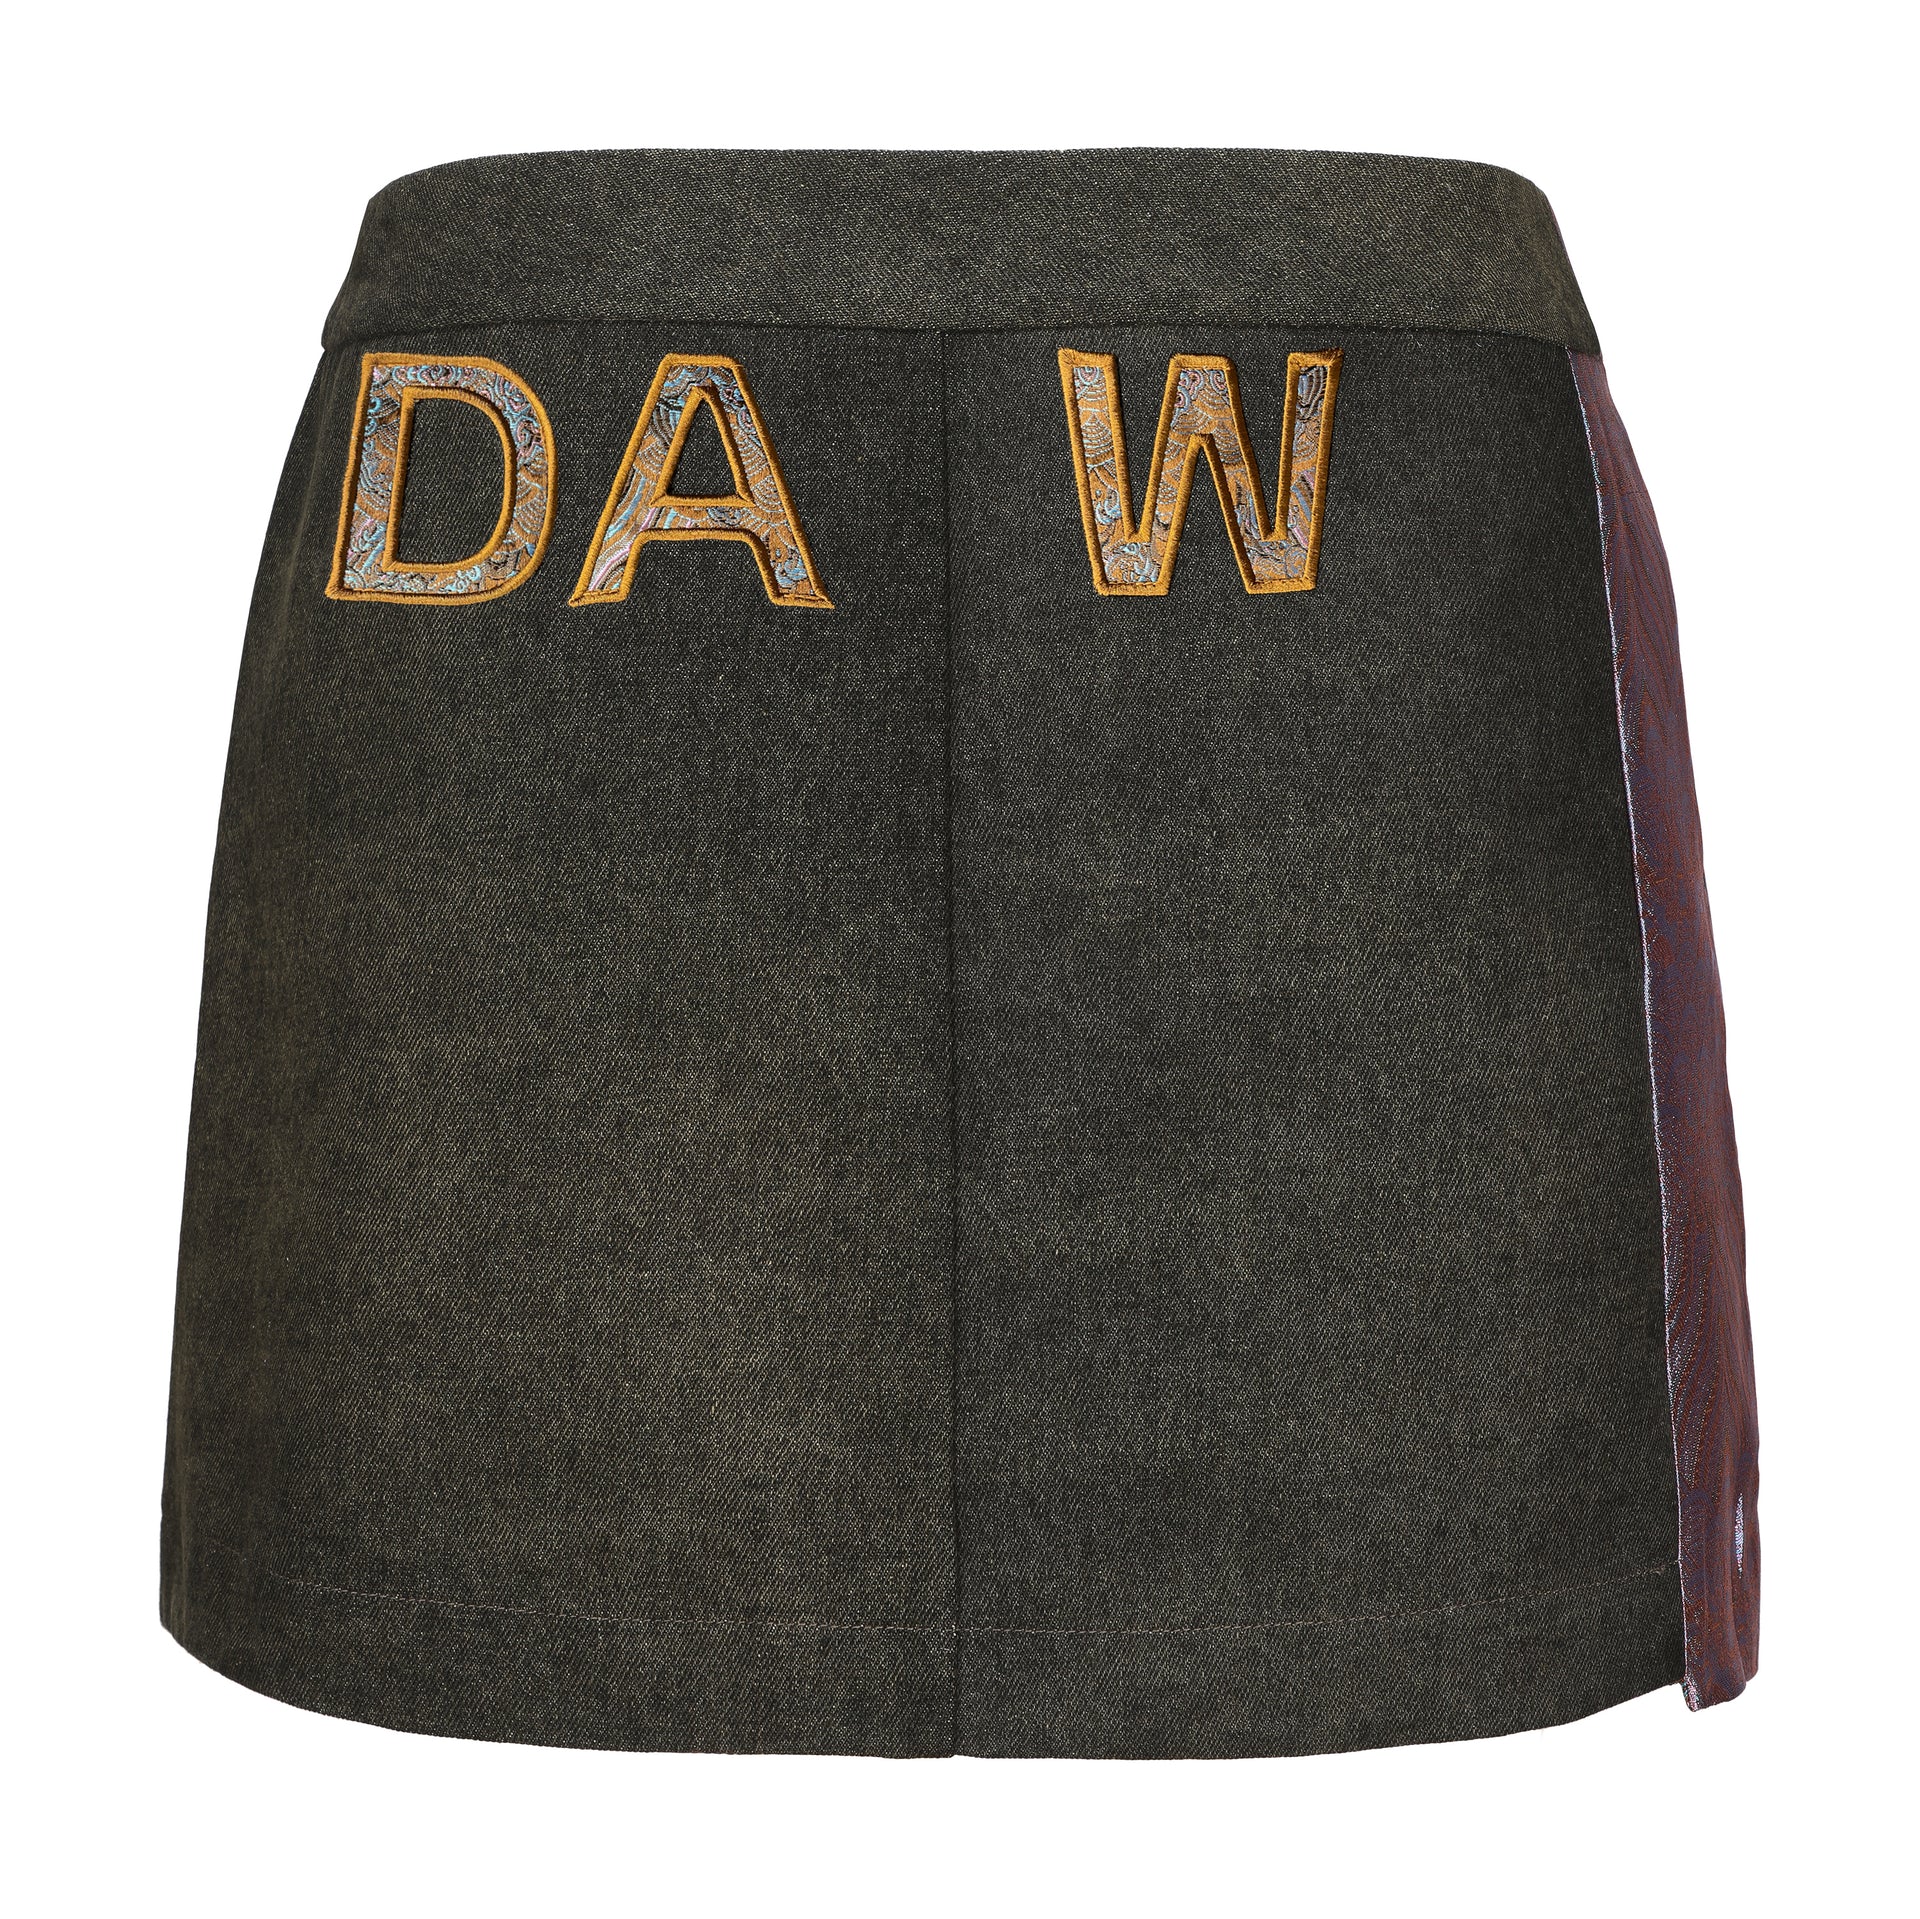 Dan Denim Patch Mini Skirt, Denim Brocade Patch, back, logo close up